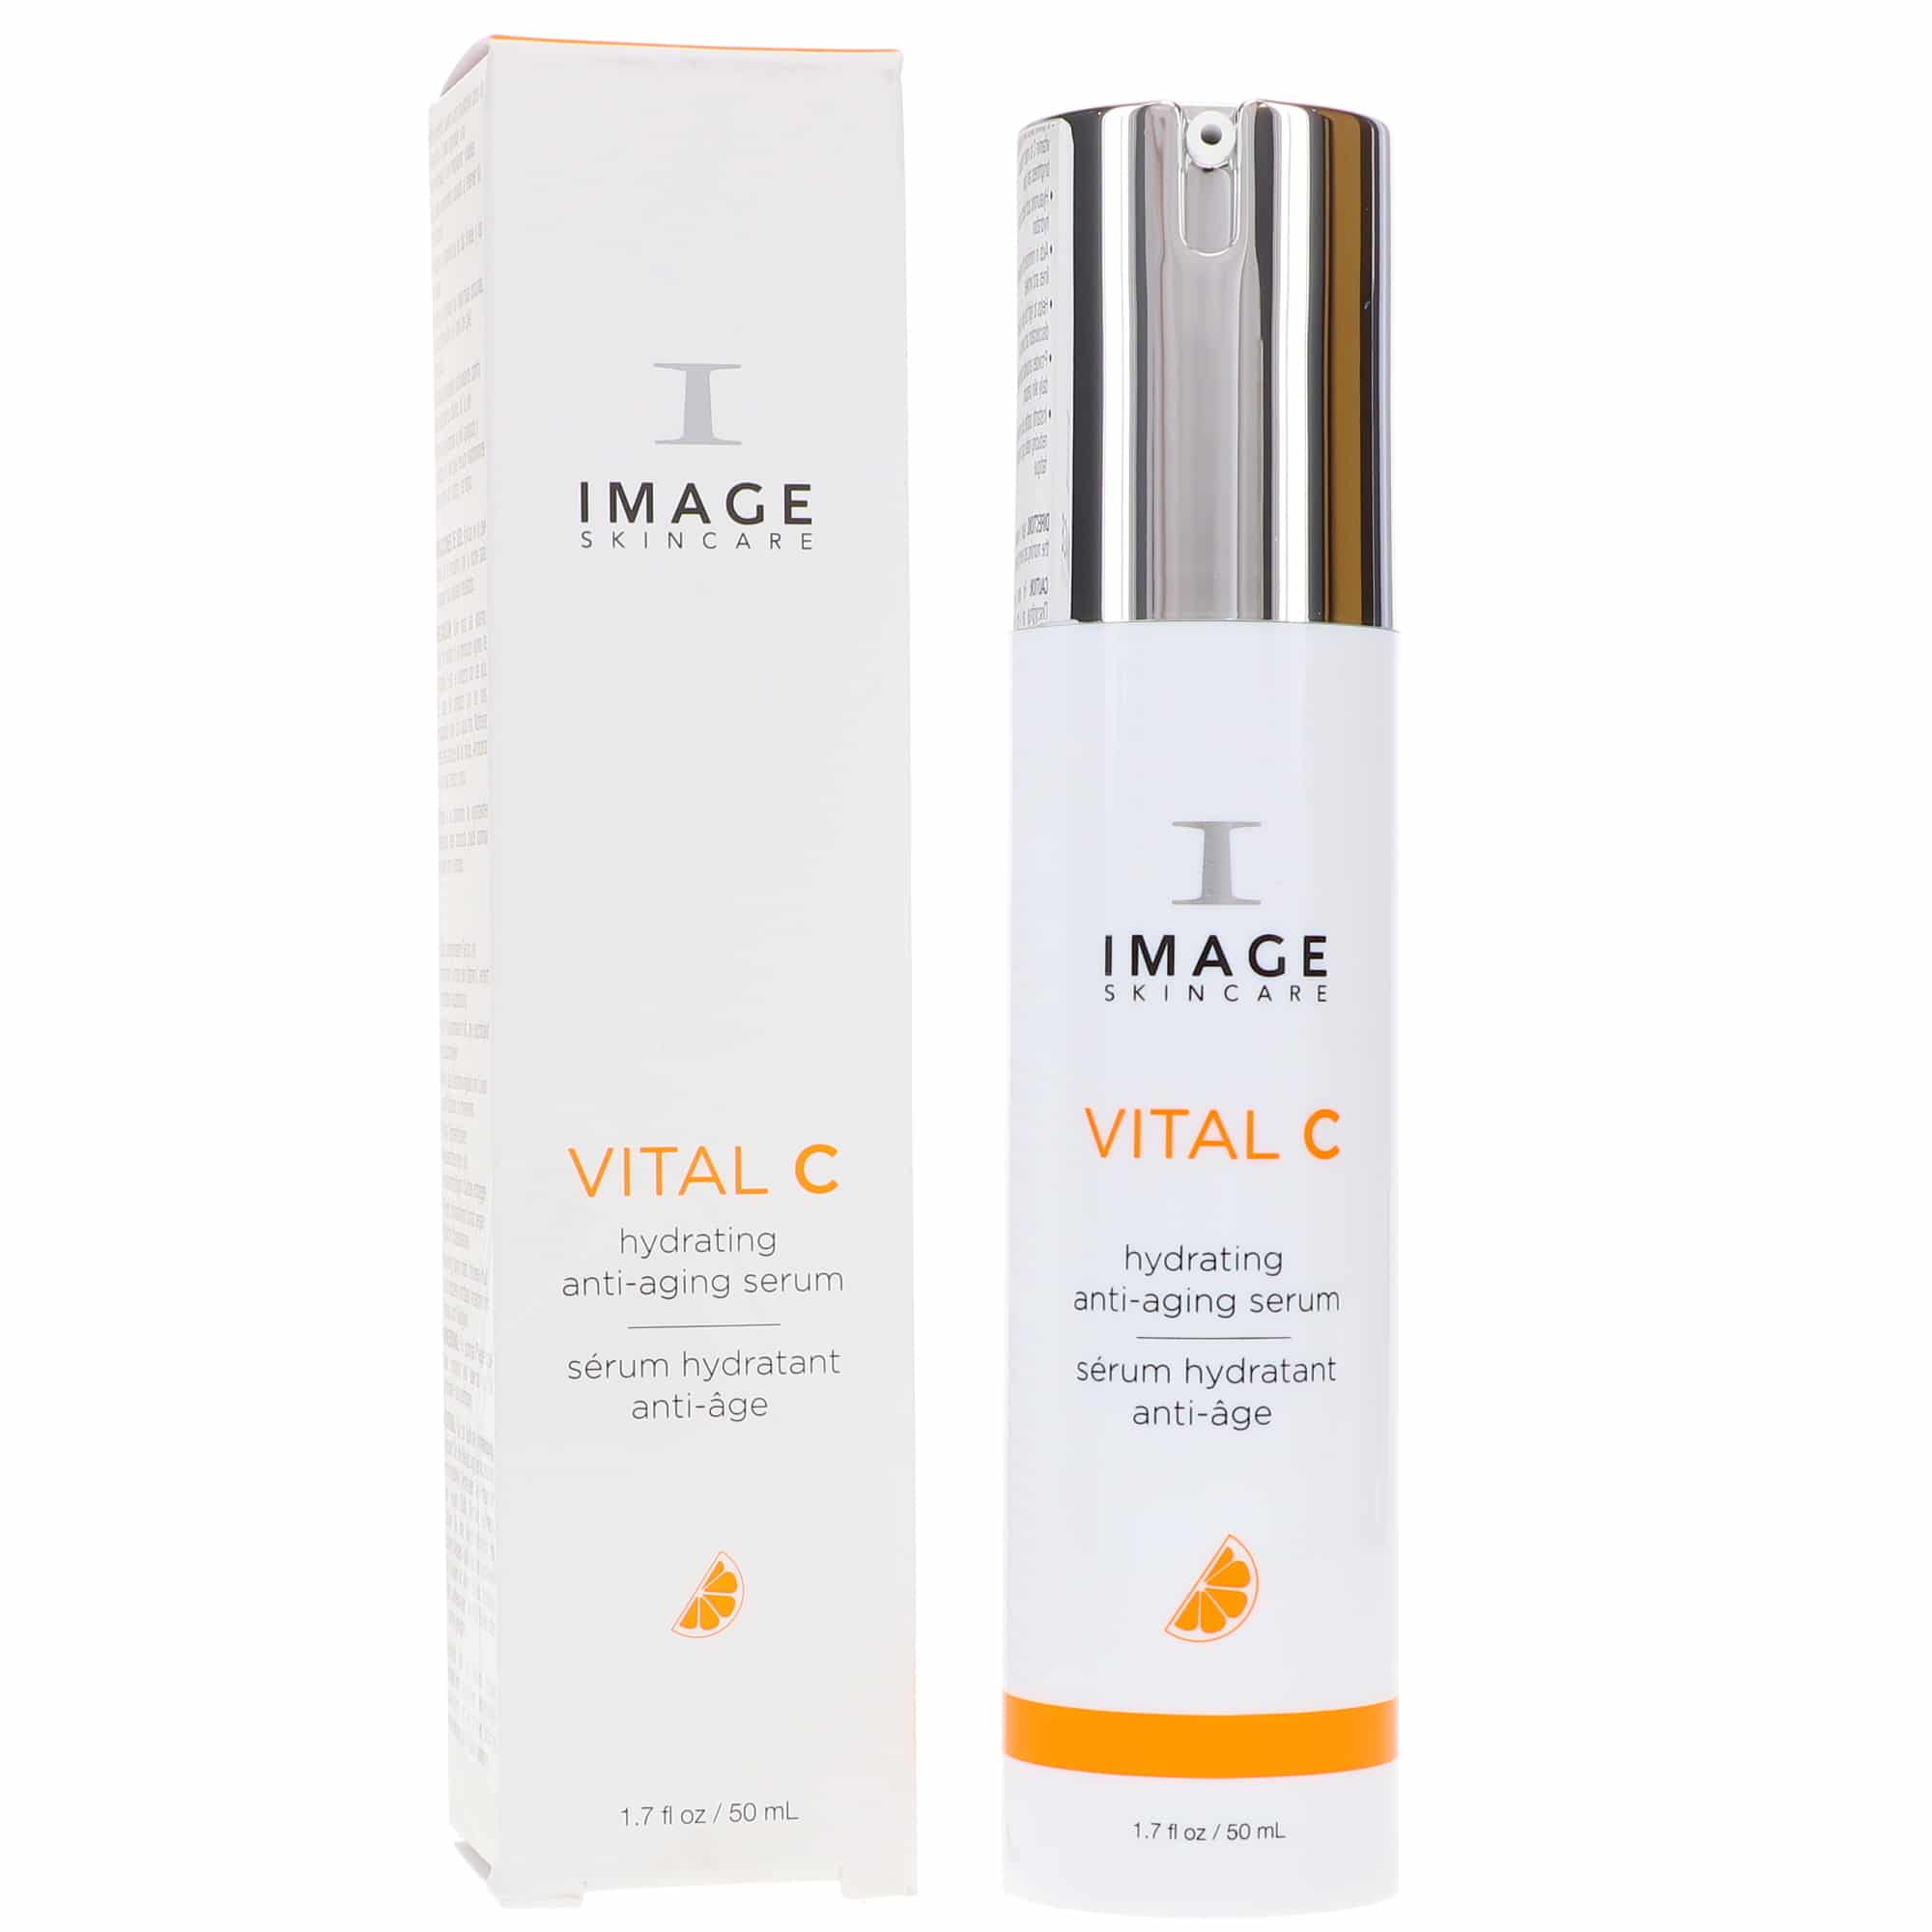 image skincare vital c hydrating anti aging serum ingredients anti aging gén sirt1 kiegészítő